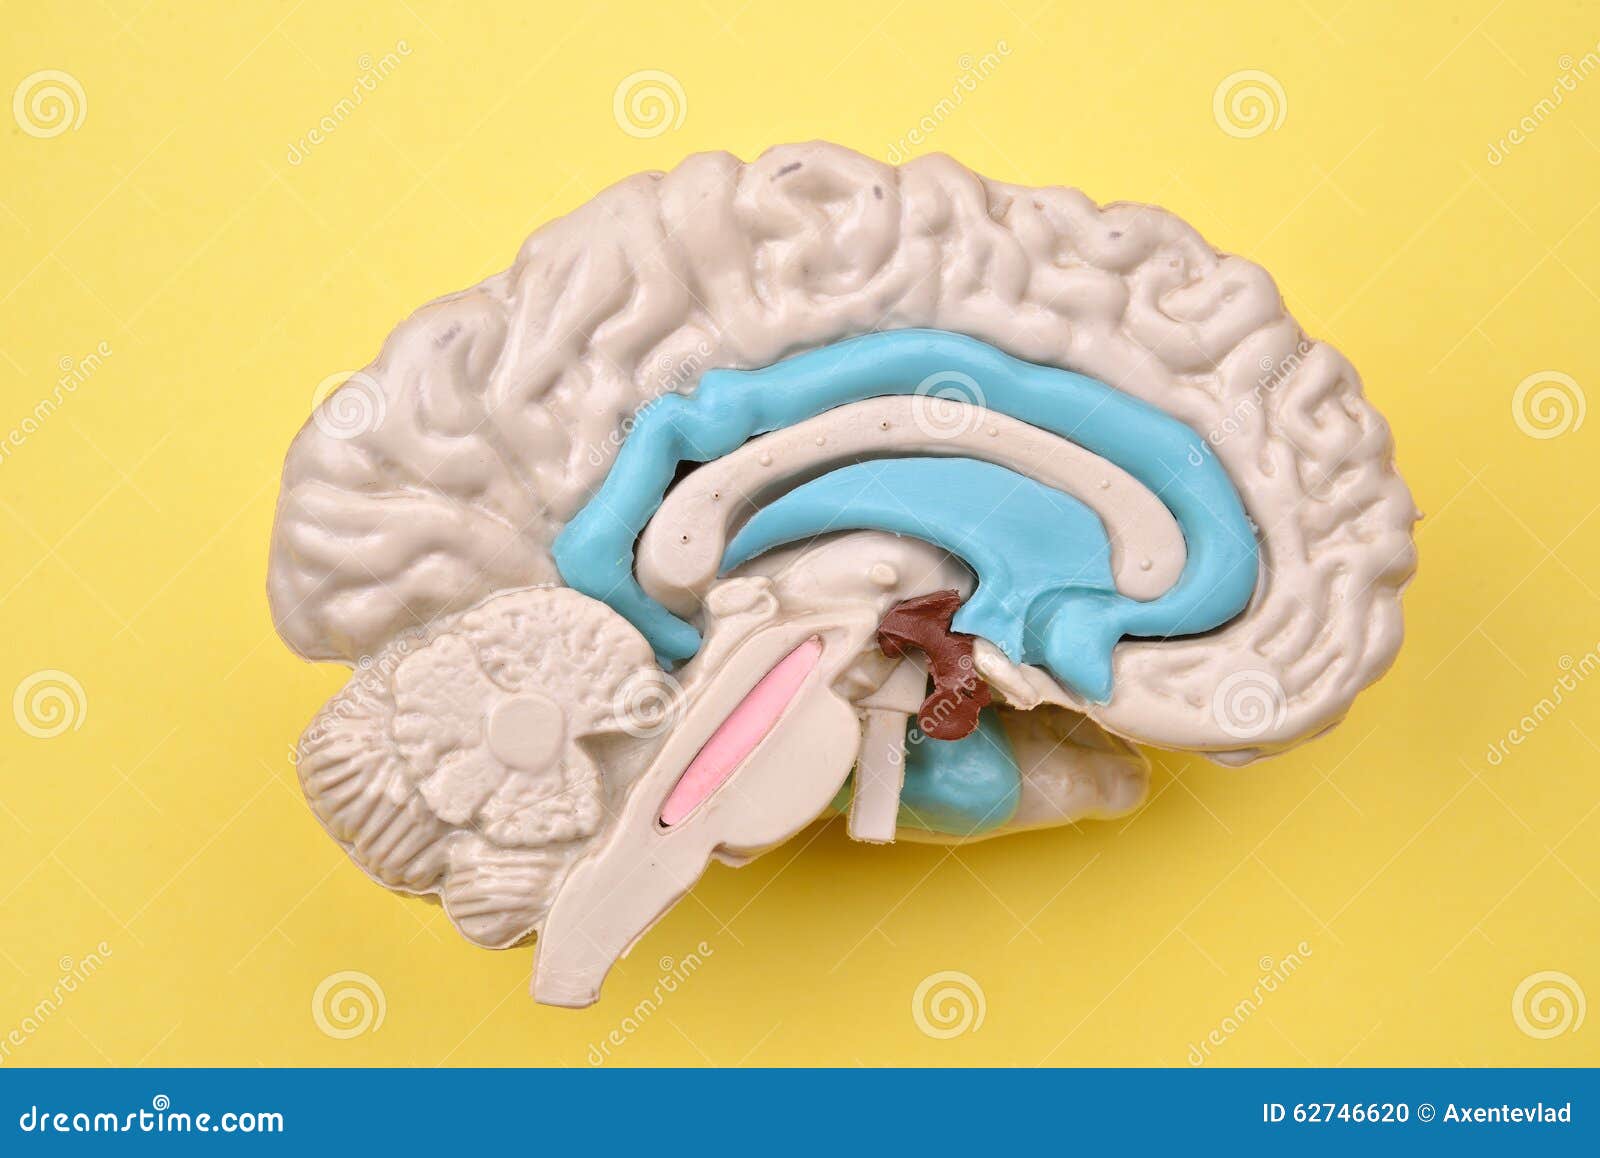 Yellow Human Brain Anatomical Model 3d Stock Illustration 1222900168